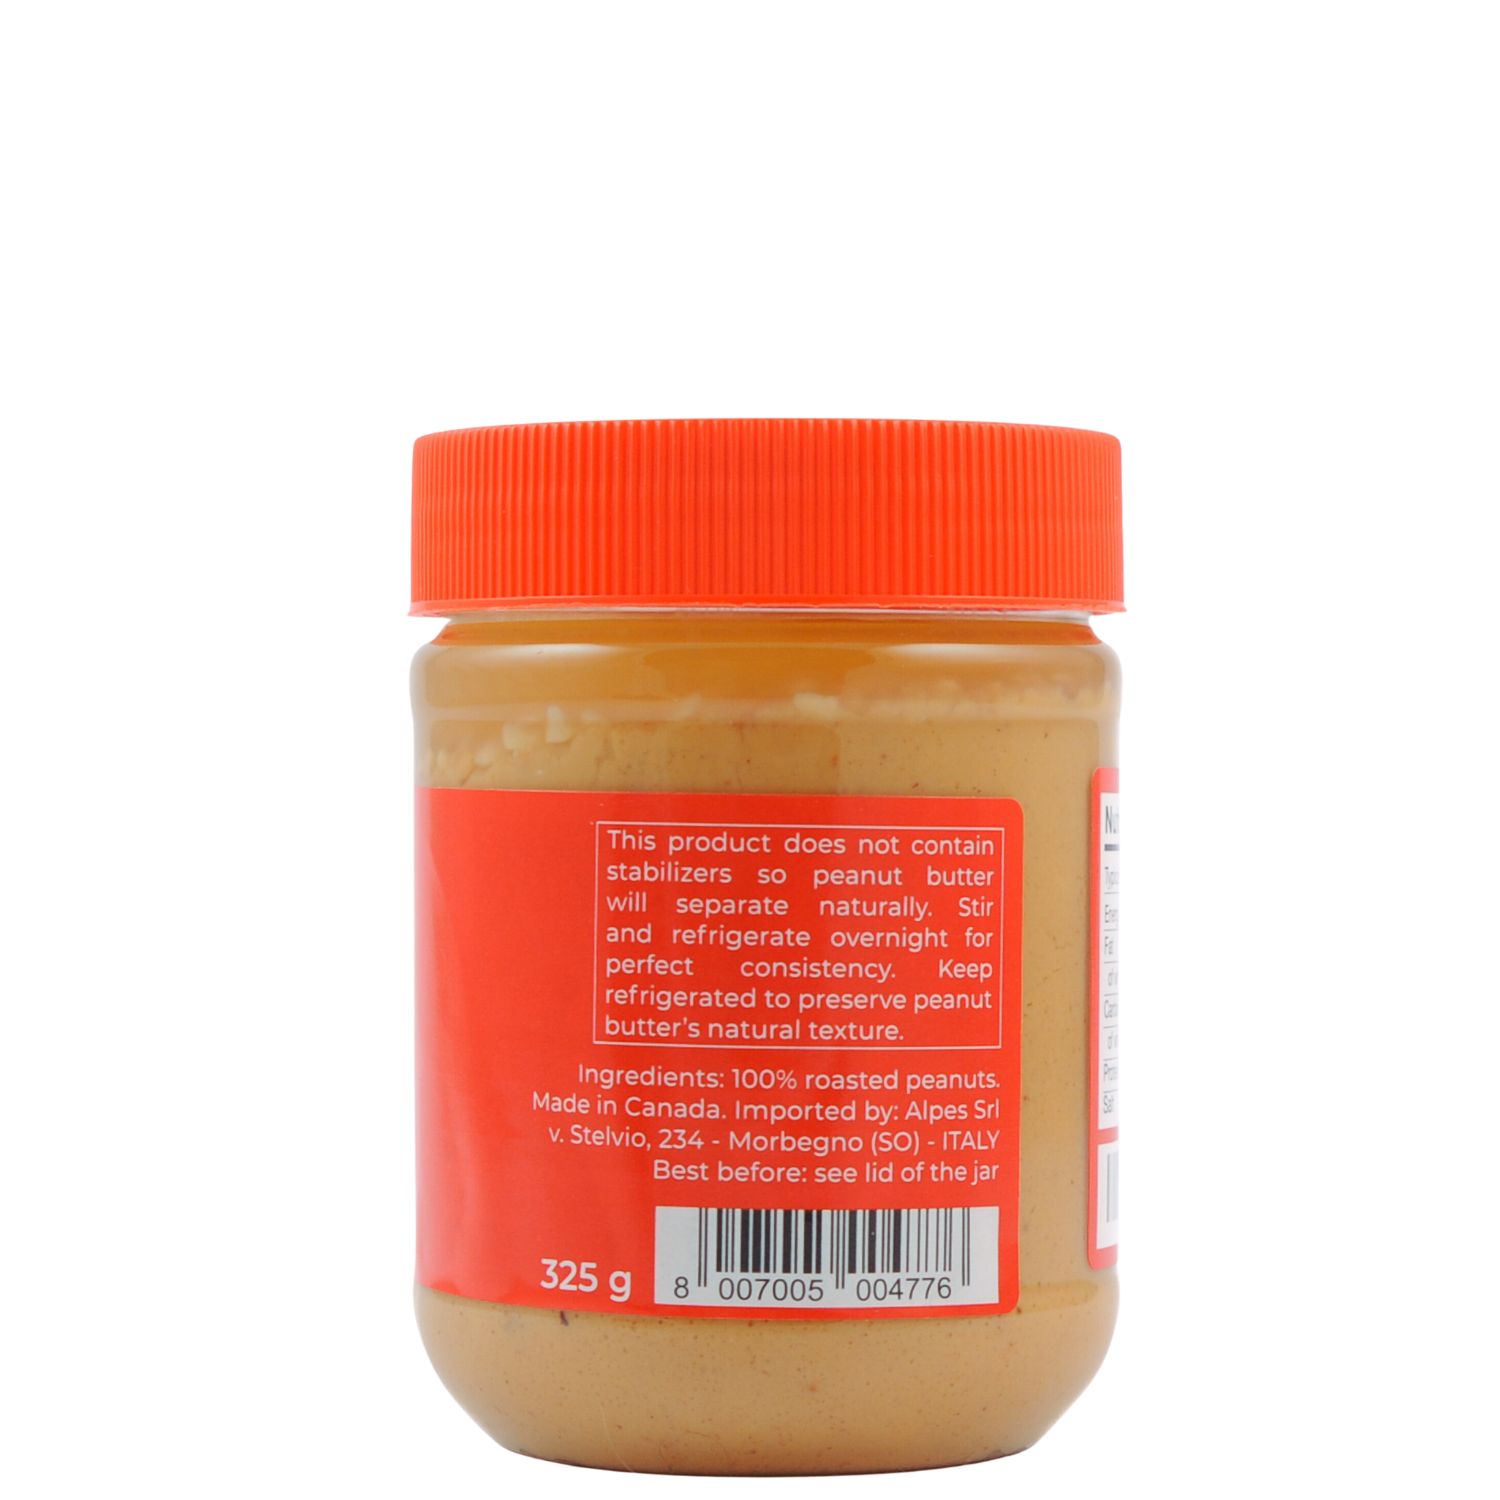 MapleFarm burro di arachidi croccante da 325g - ingredienti